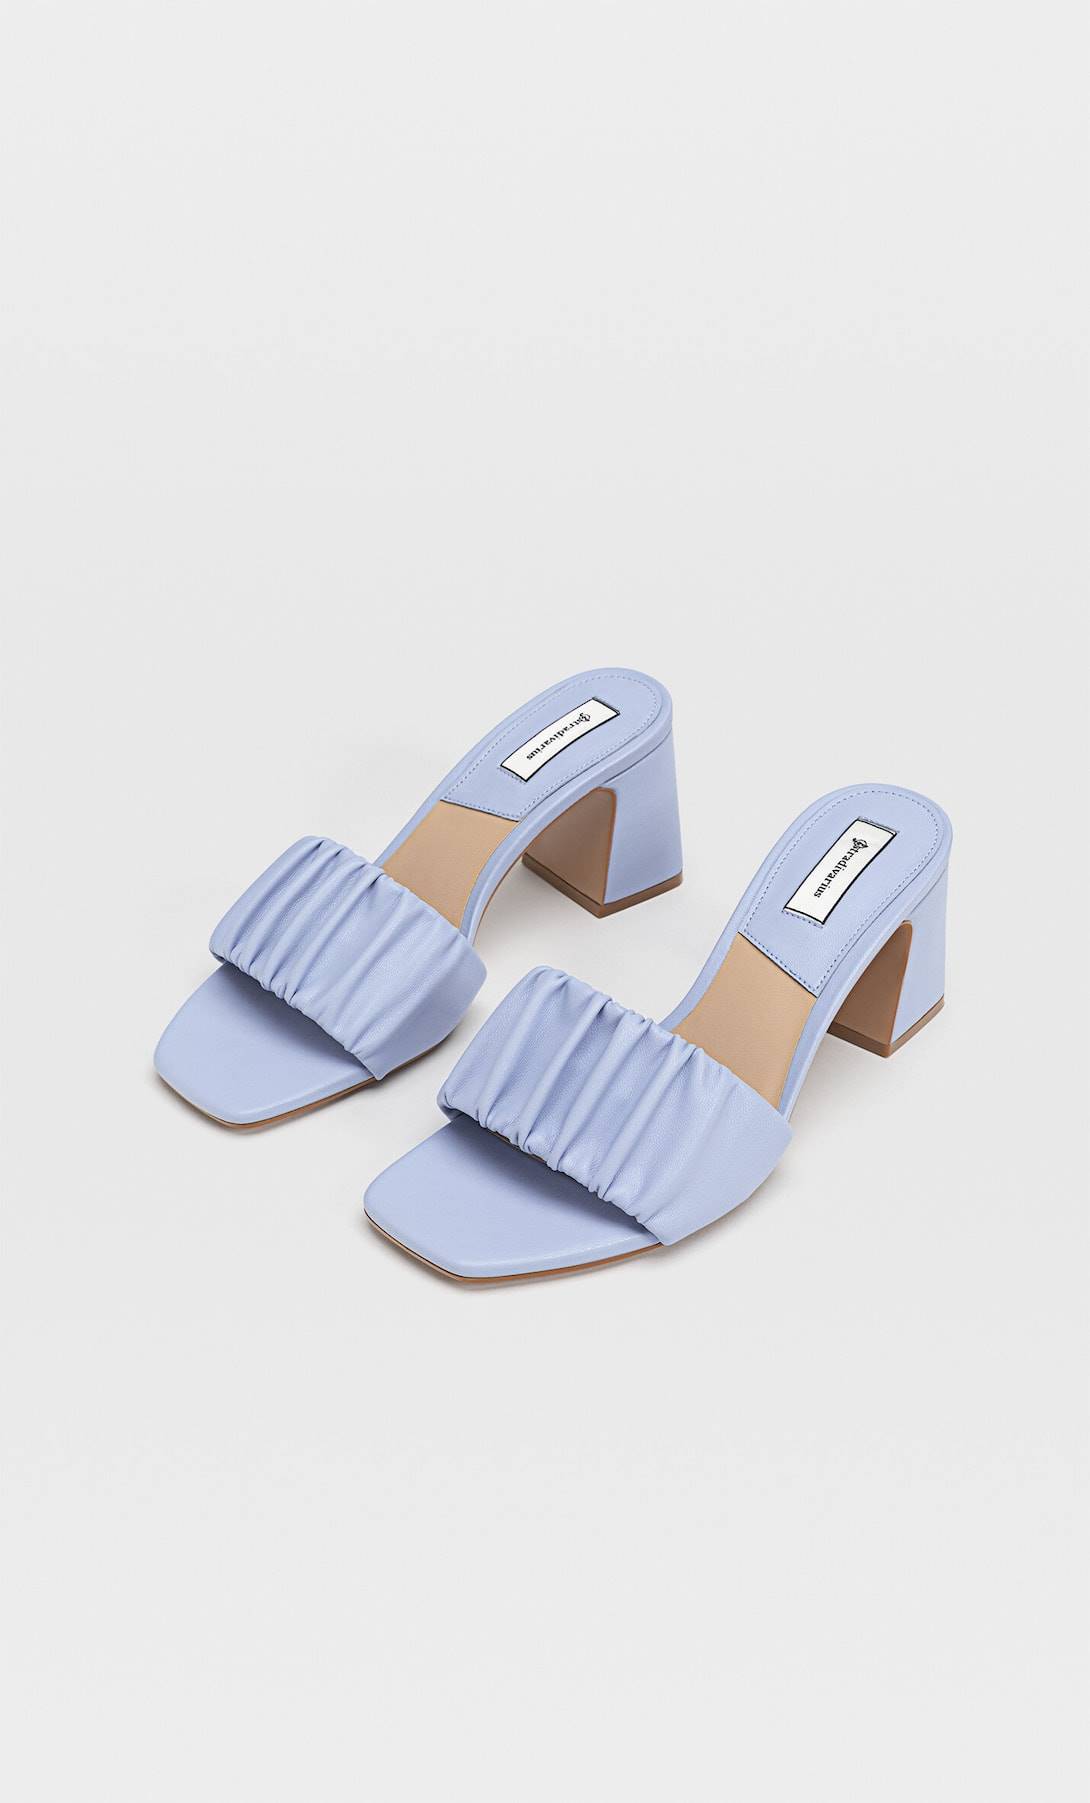 Sandalias azules rizadas